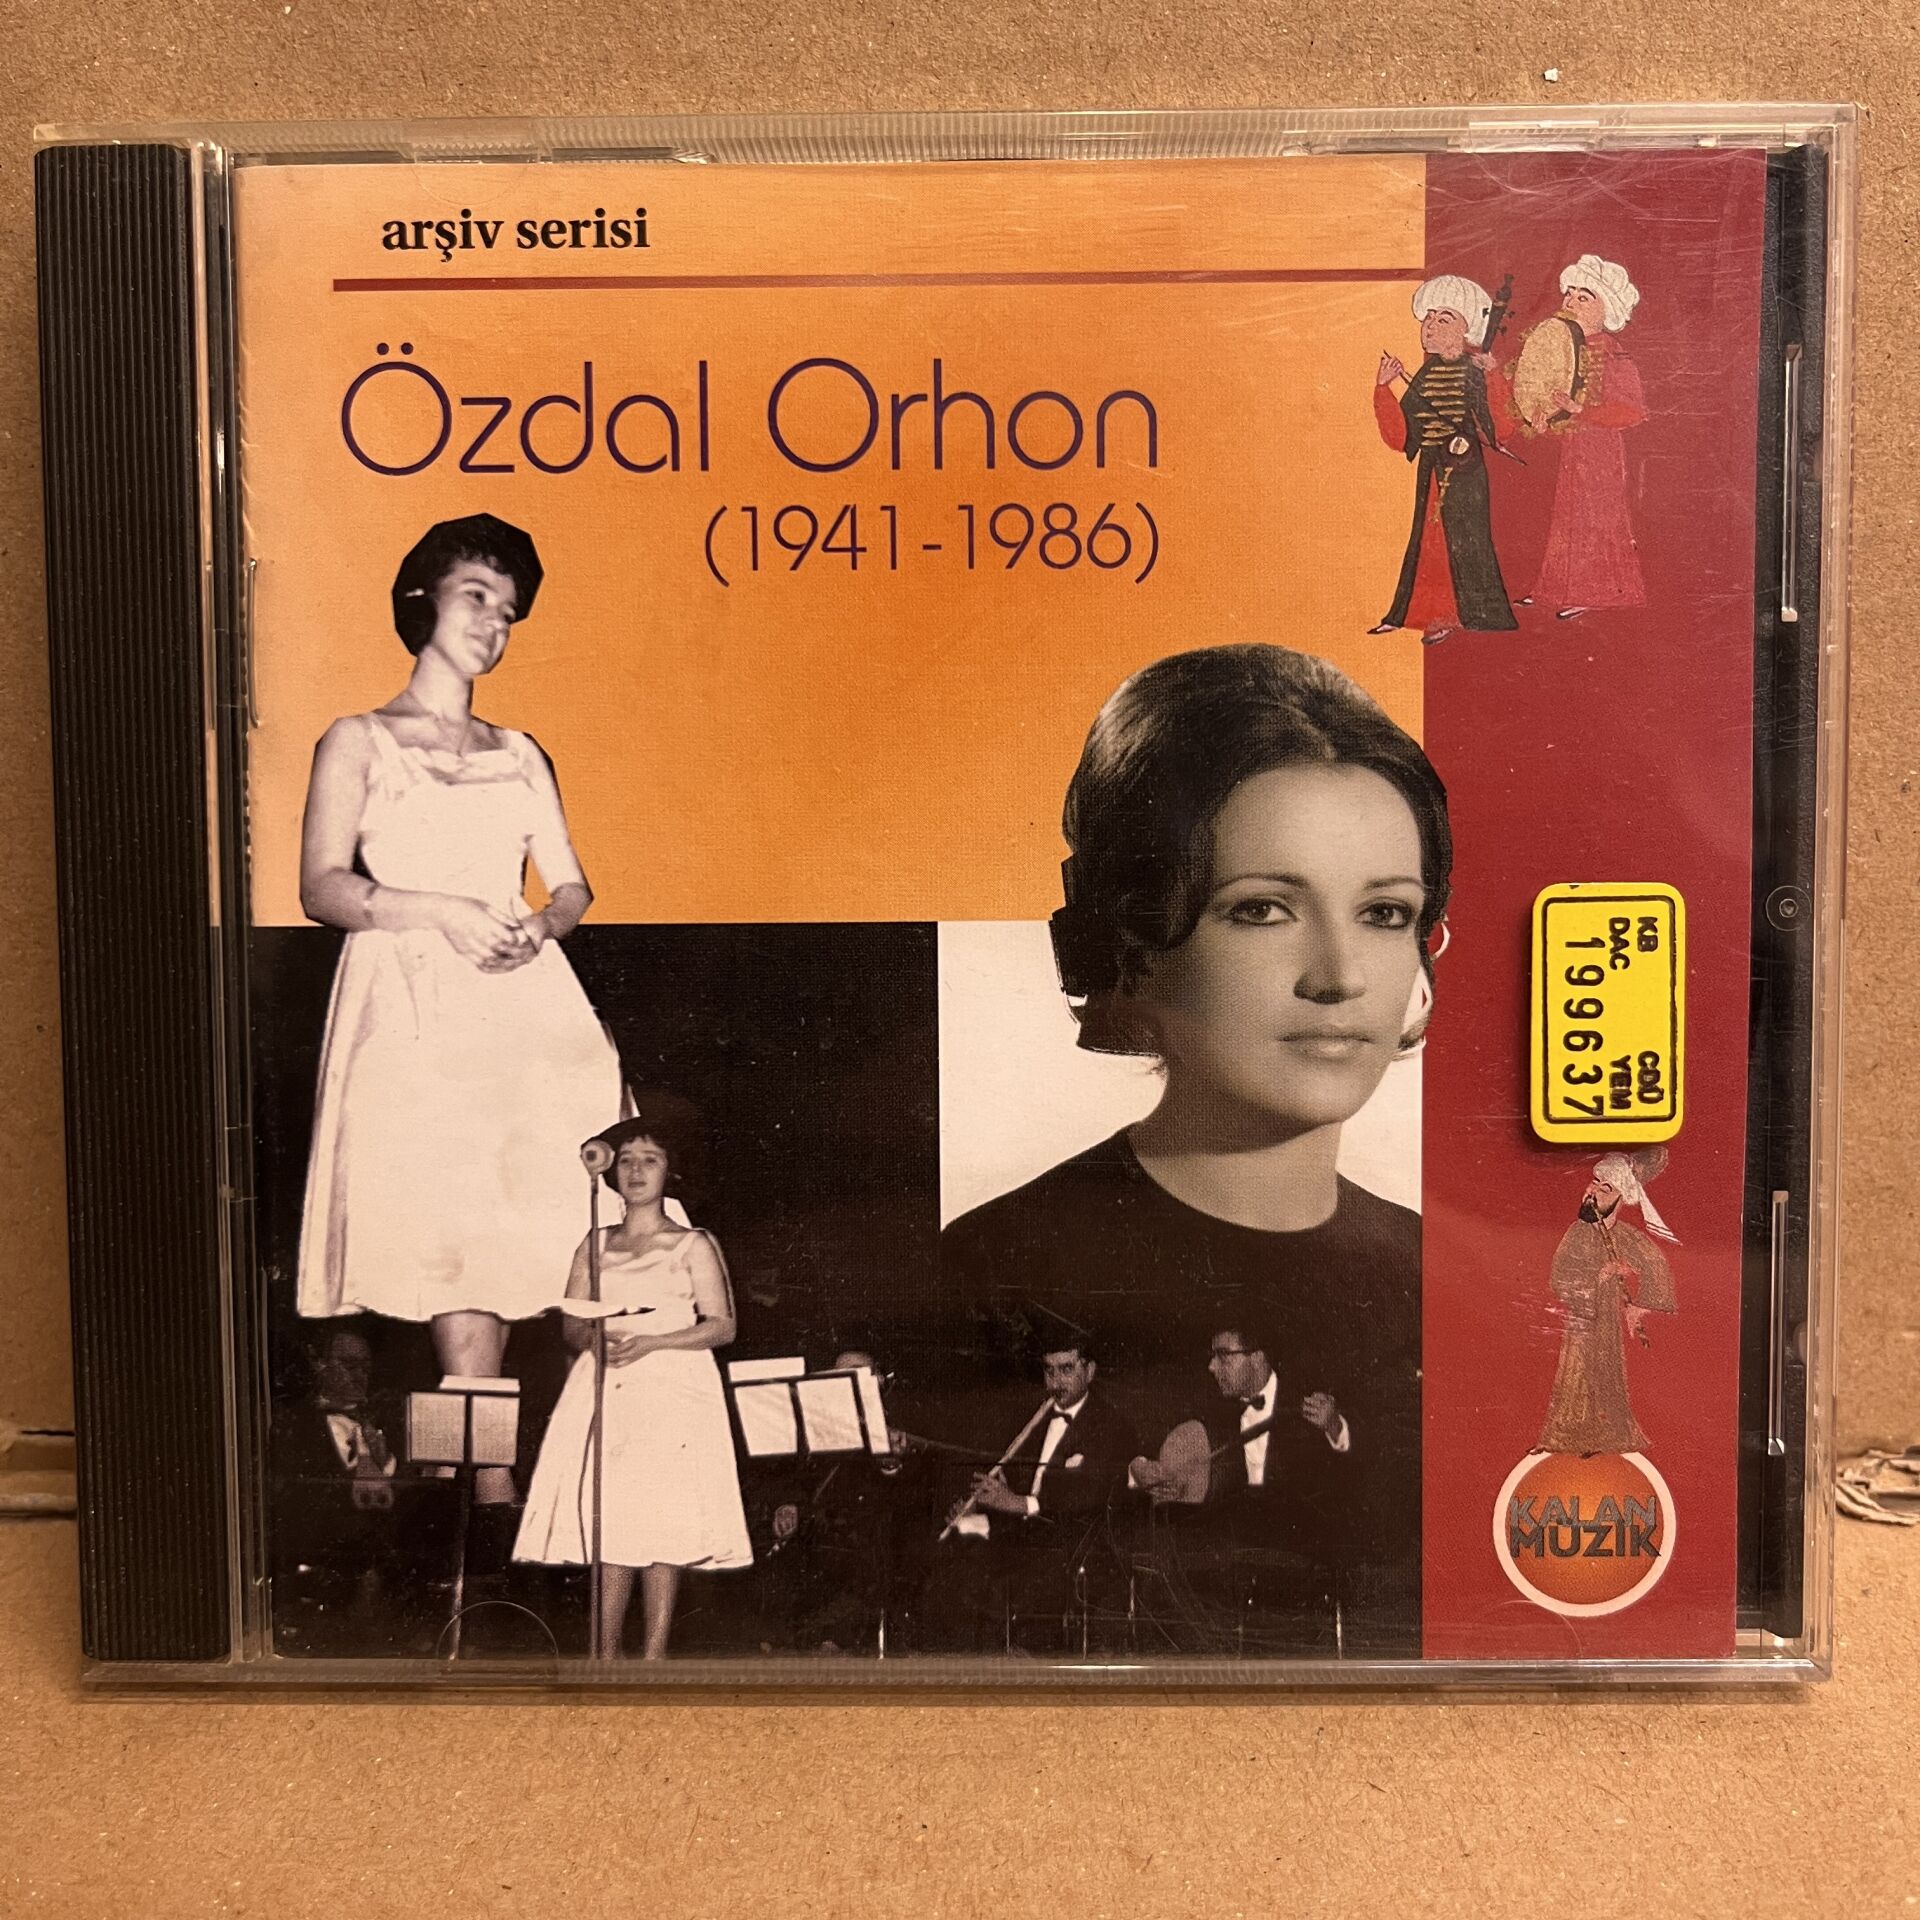 ÖZDAL ORHON - KALAN MÜZİK ARŞİV SERİSİ 1941-1986 (1998) - CD 2.EL